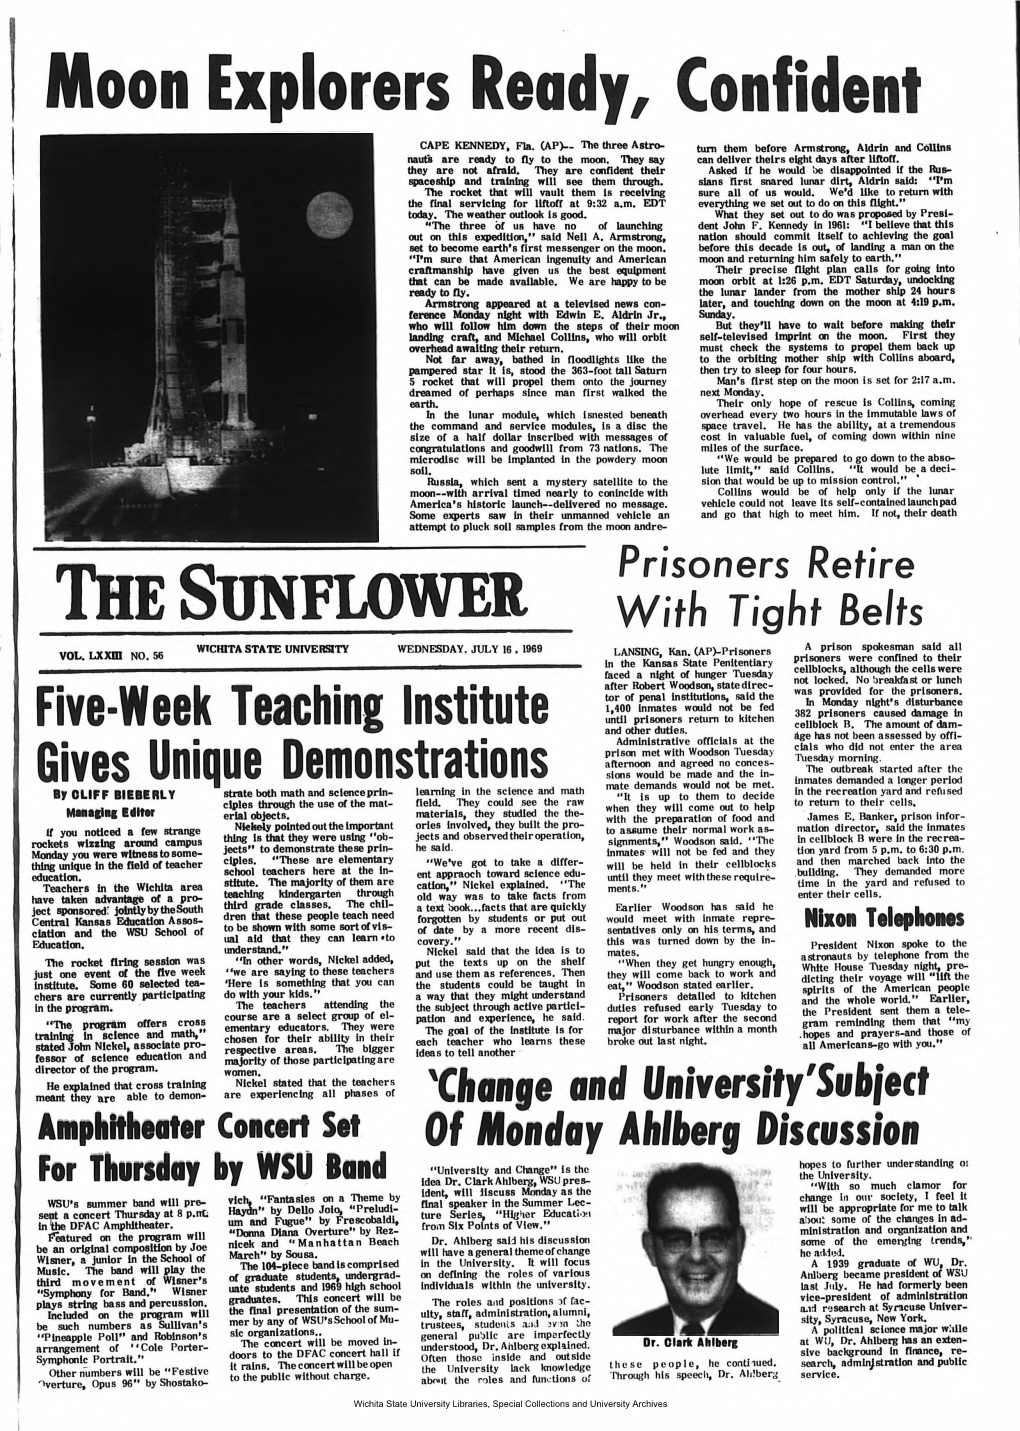 Sunflower July 16, 1969